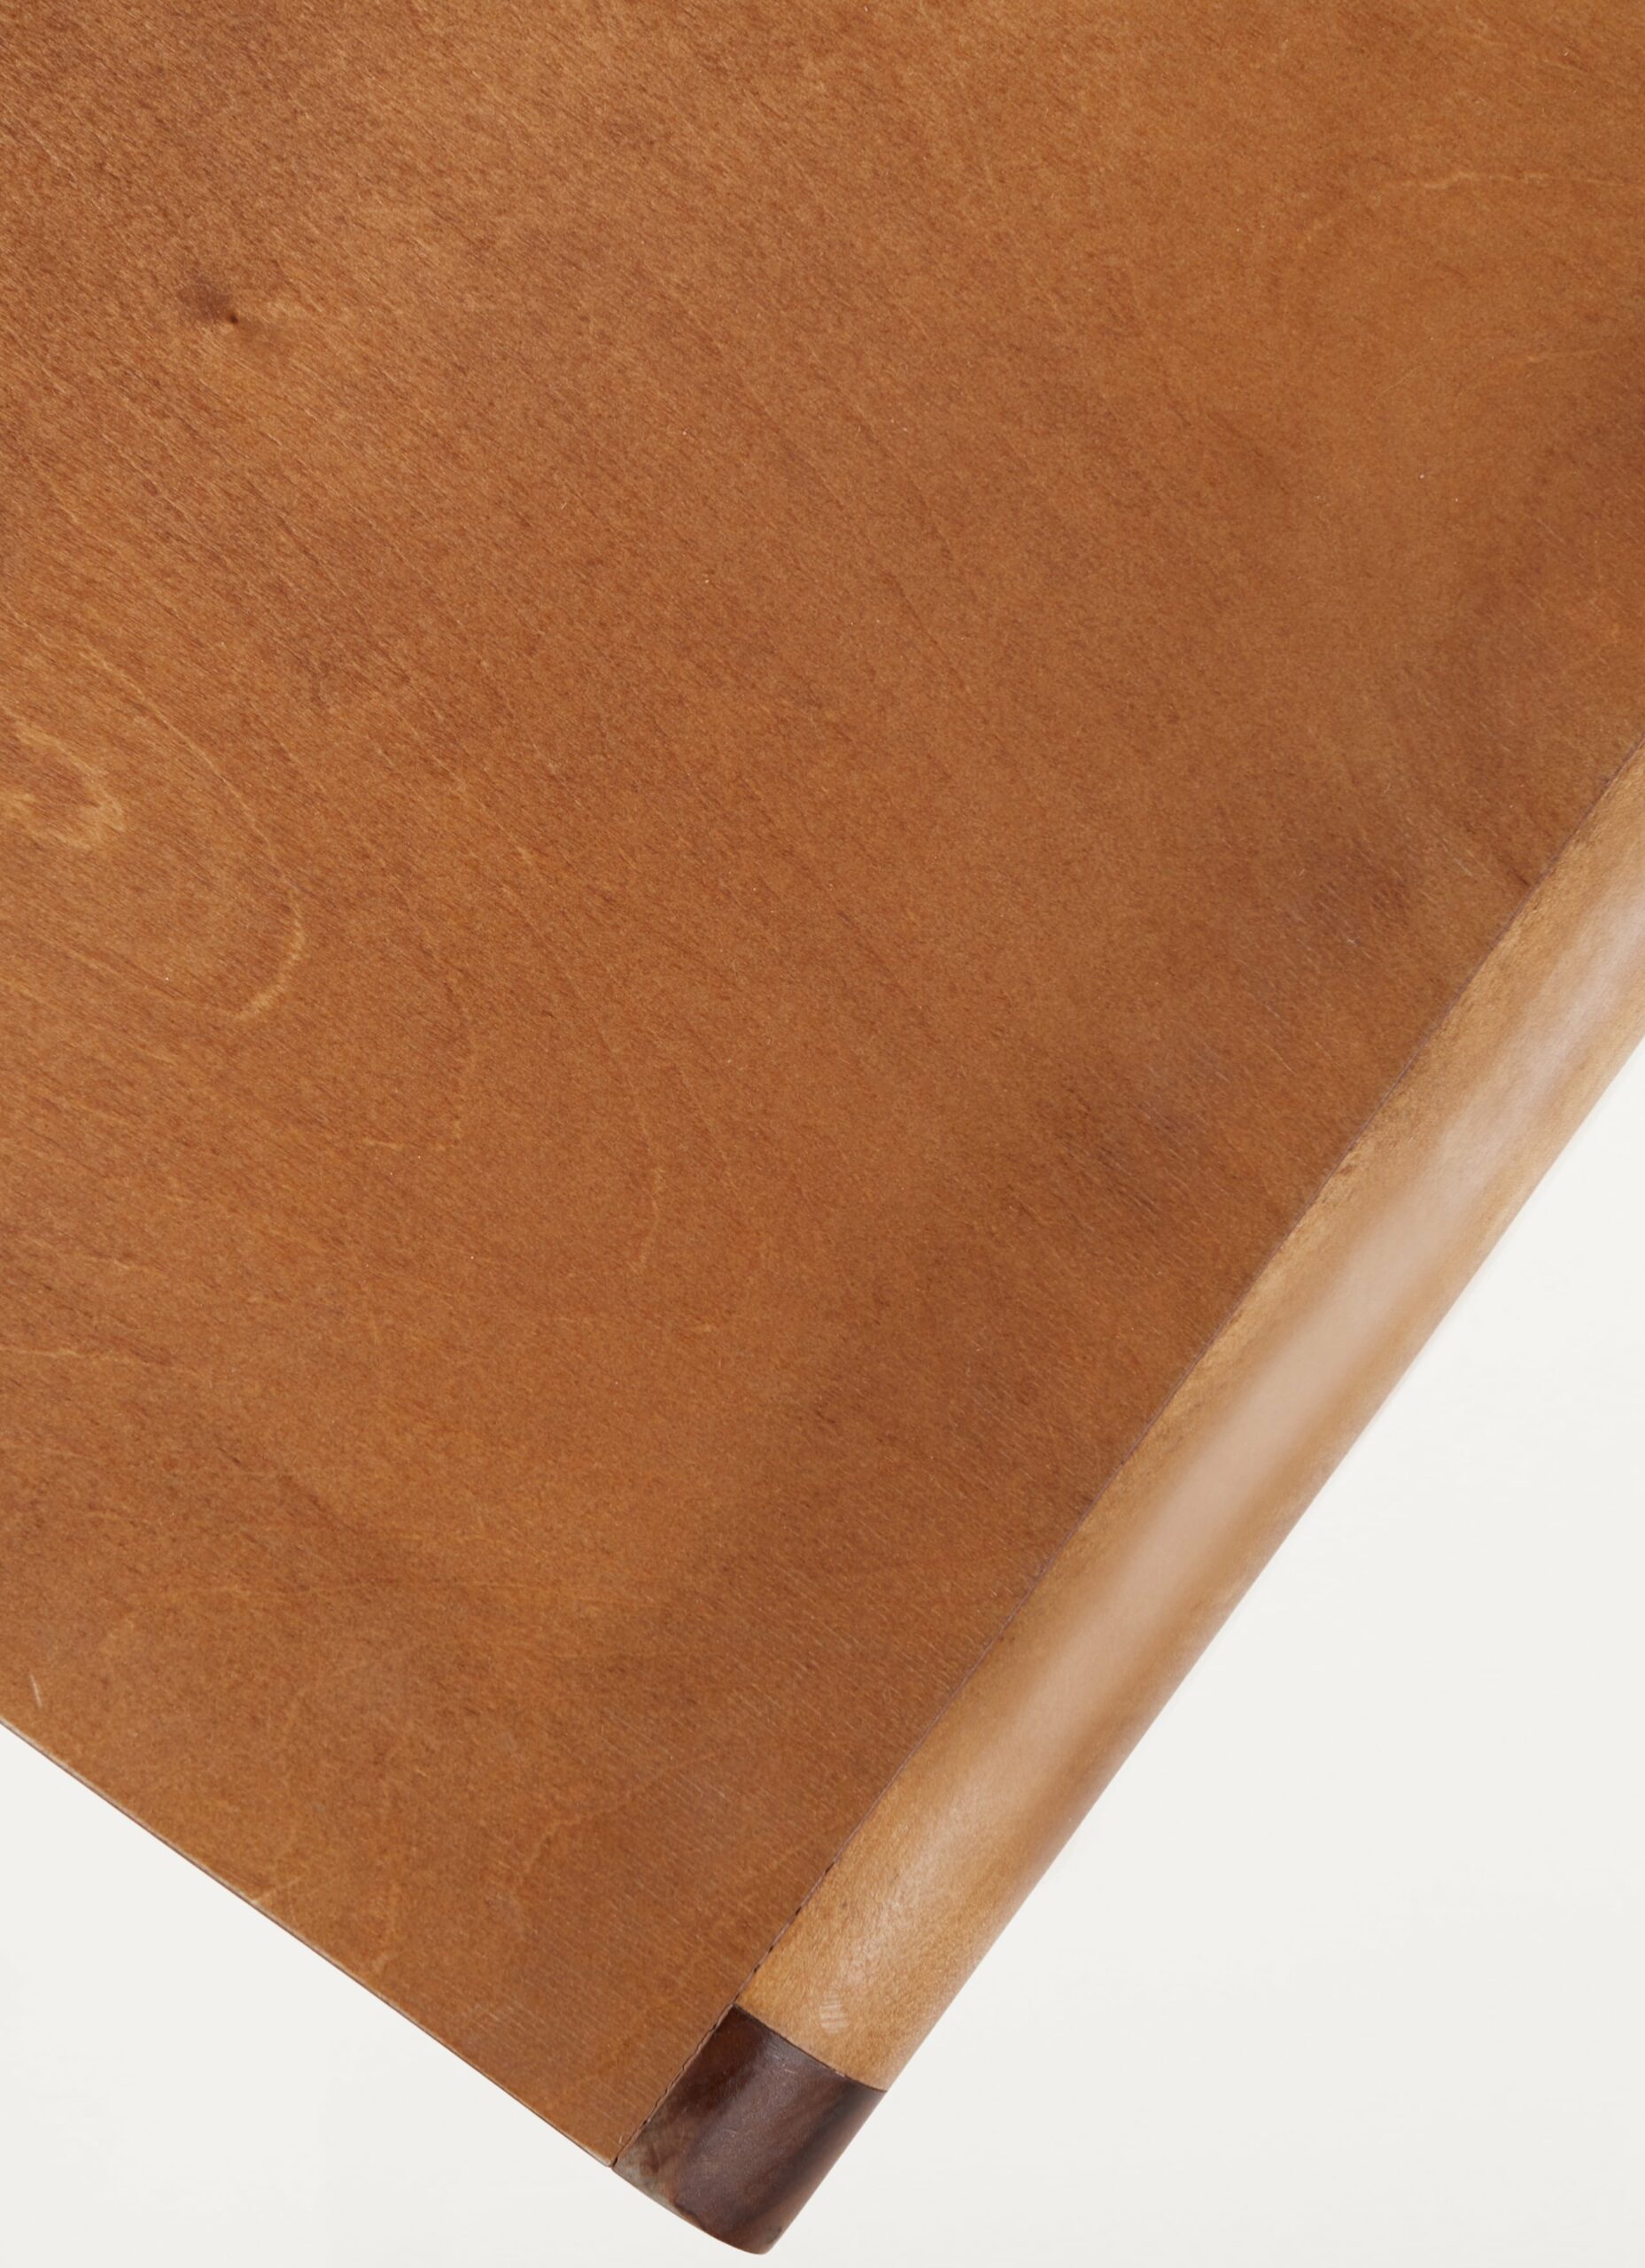 Frama - Chair 01 - Warm Brown Wood